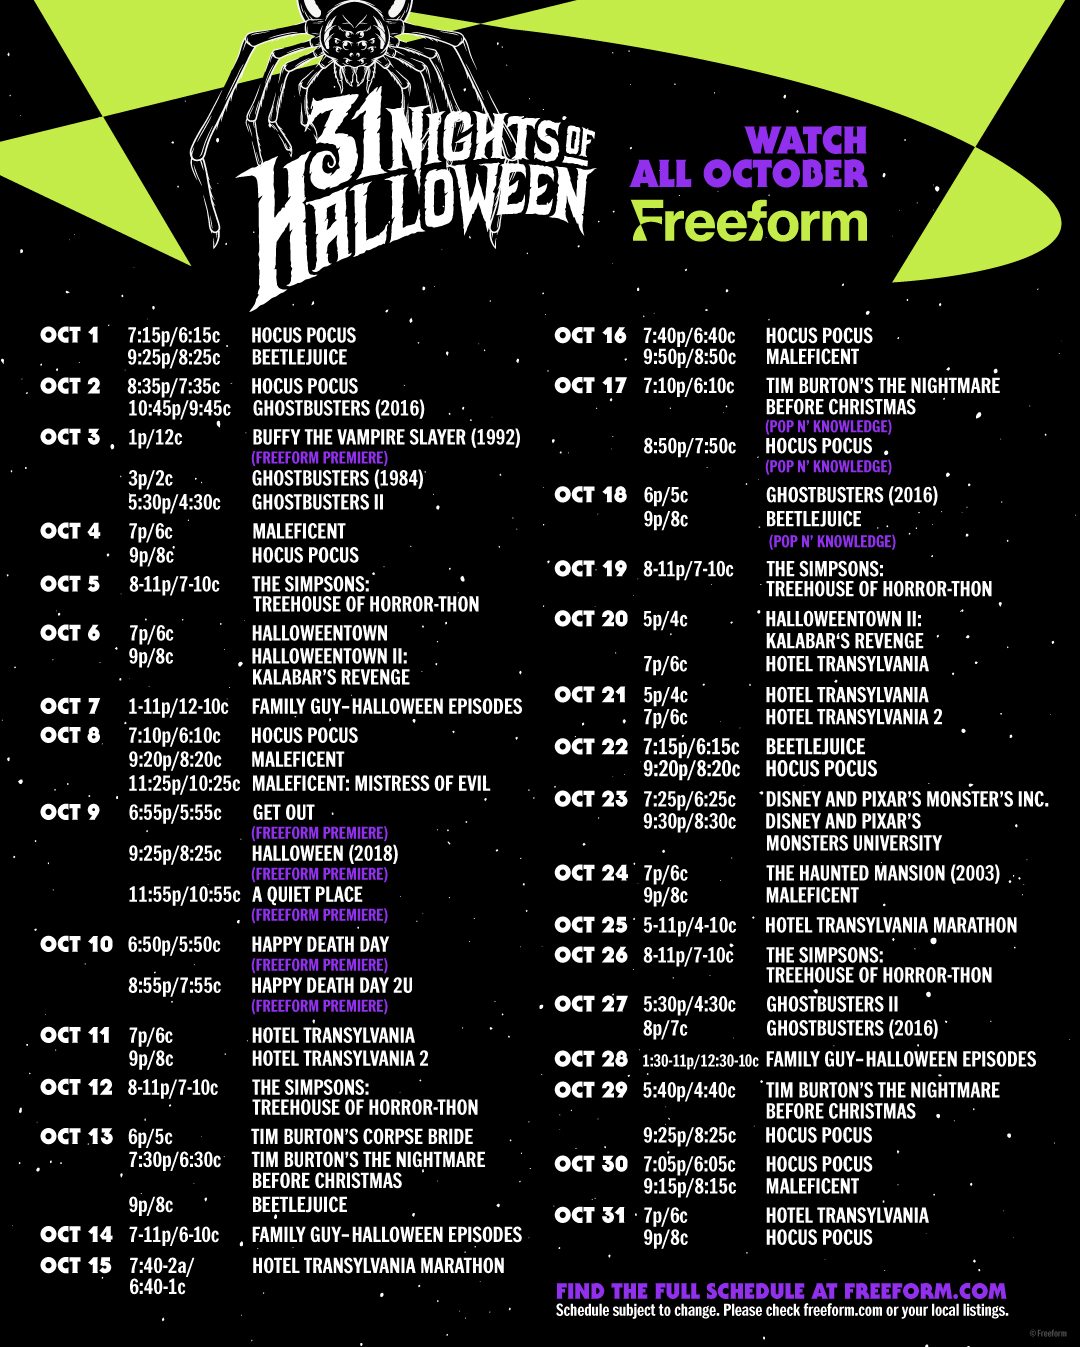 Freeform Reveals 31 Nights of Halloween Schedule 2022 - That Hashtag Show